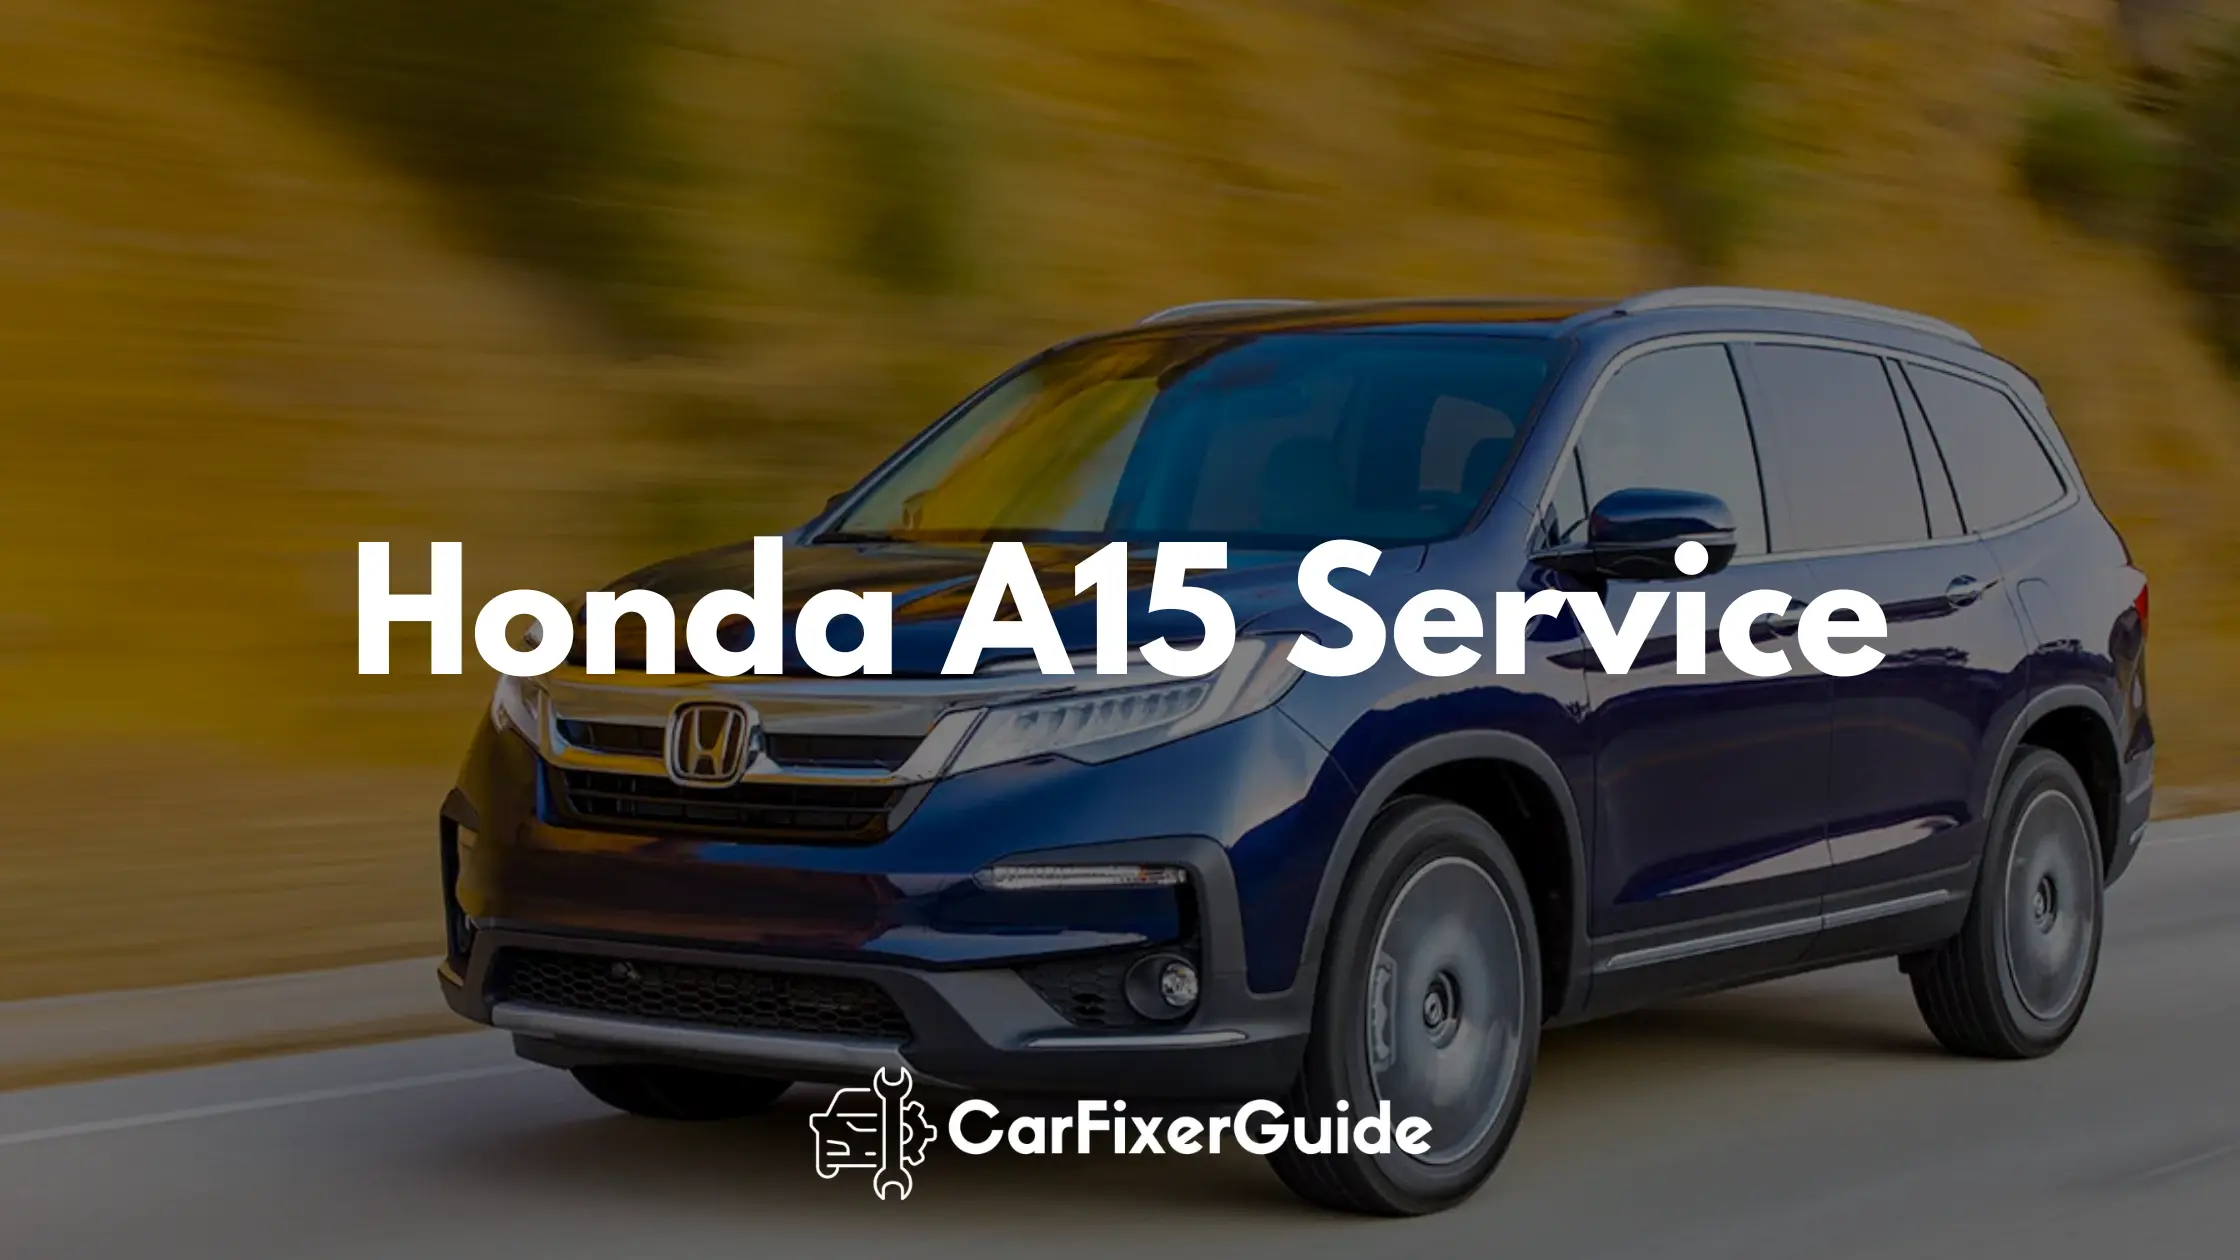 Honda A15 Service